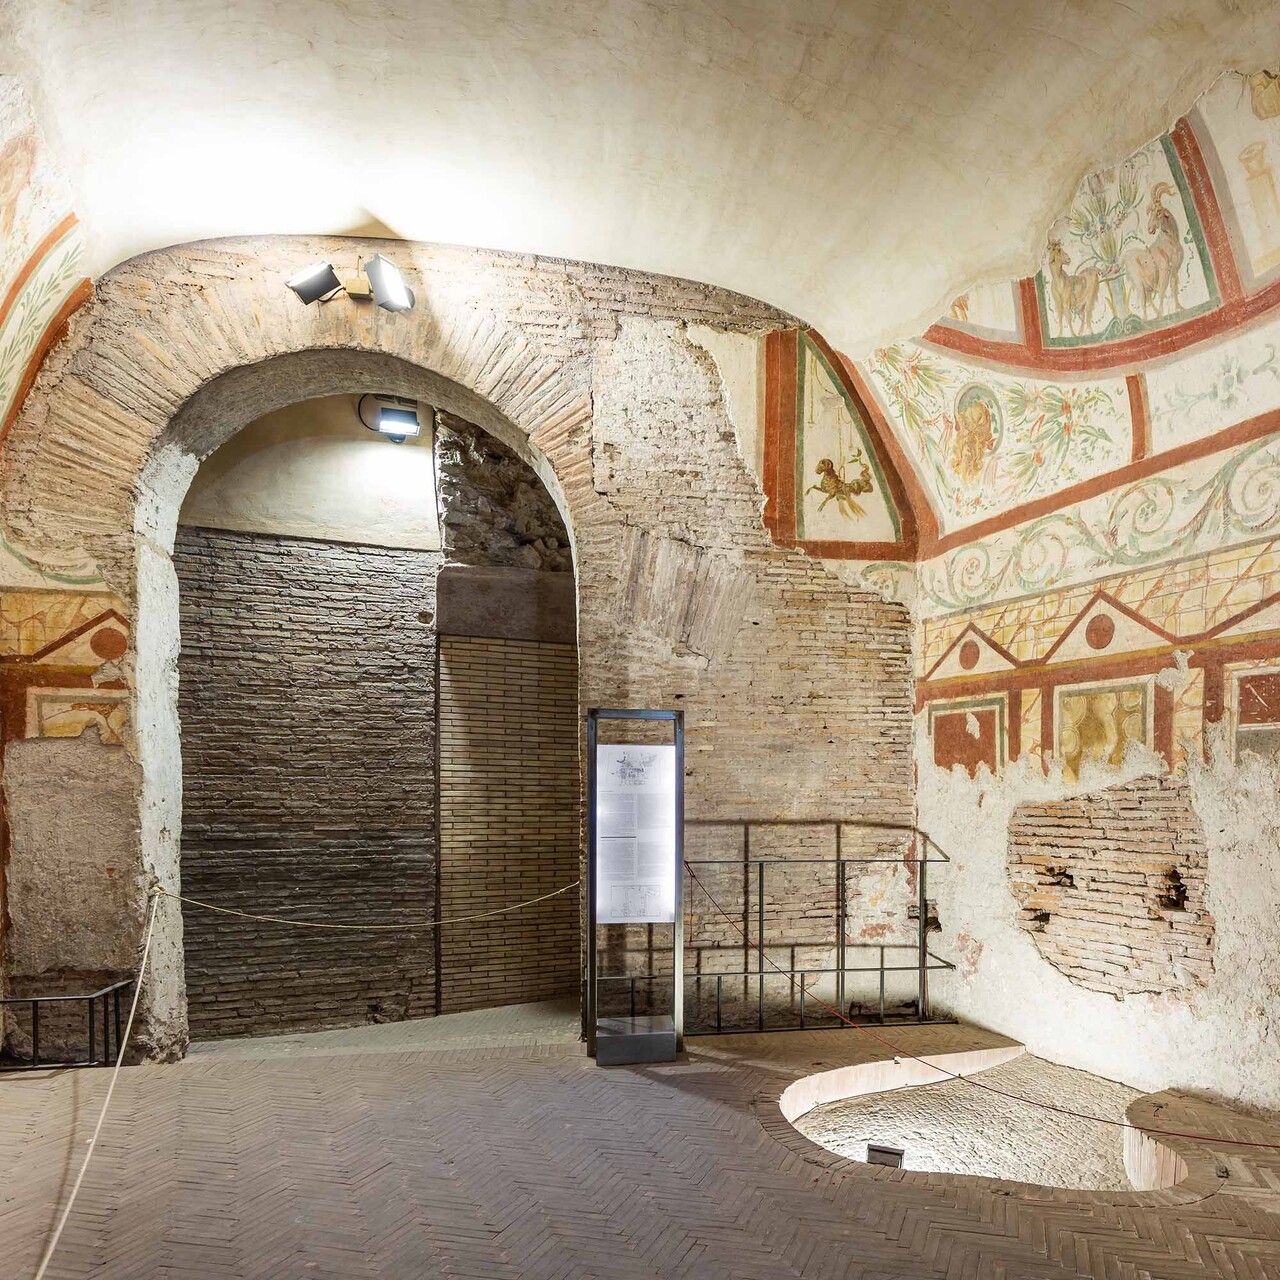 ArcheoVerso: o projeto cultural usará o Case Romane del Celio, um antigo complexo residencial romano, ainda pouco conhecido mesmo atrás do Coliseu, para a fase experimental de dois anos